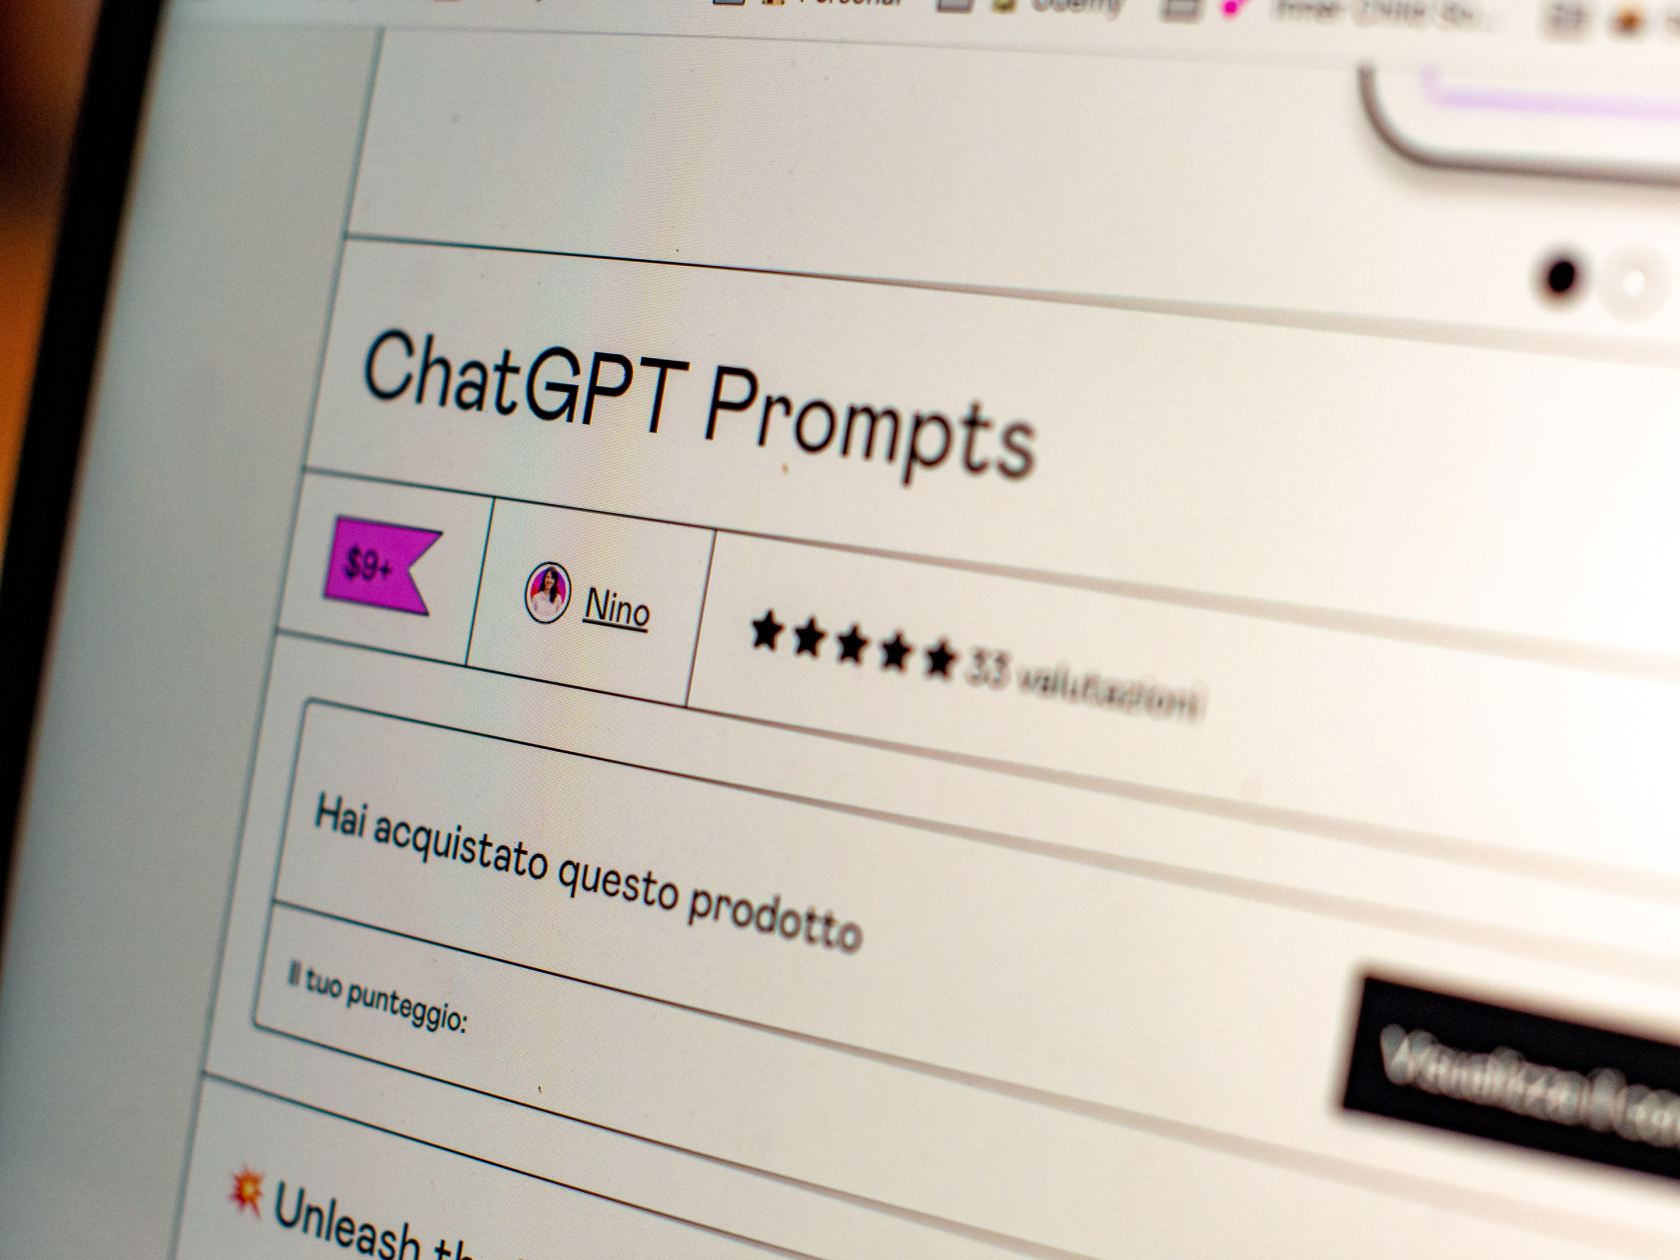 ChatGPT para cientistas de dados: liberando insights orientados por IA